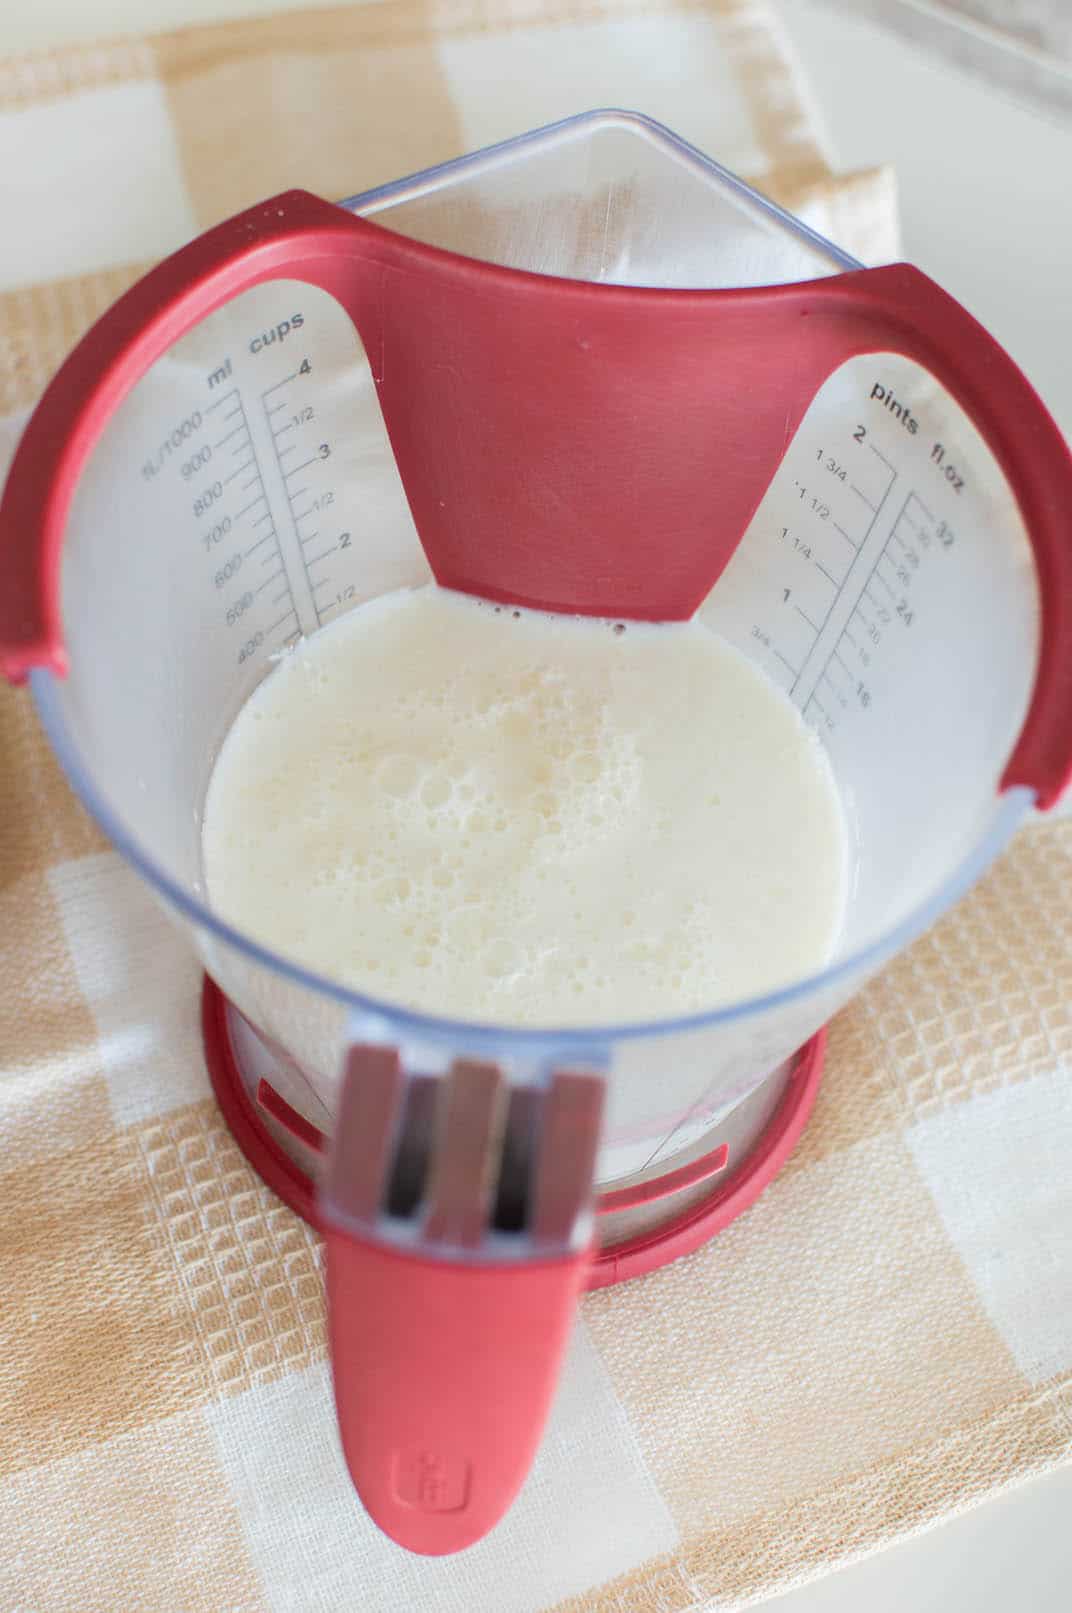 Buttermilk in a measuring cup